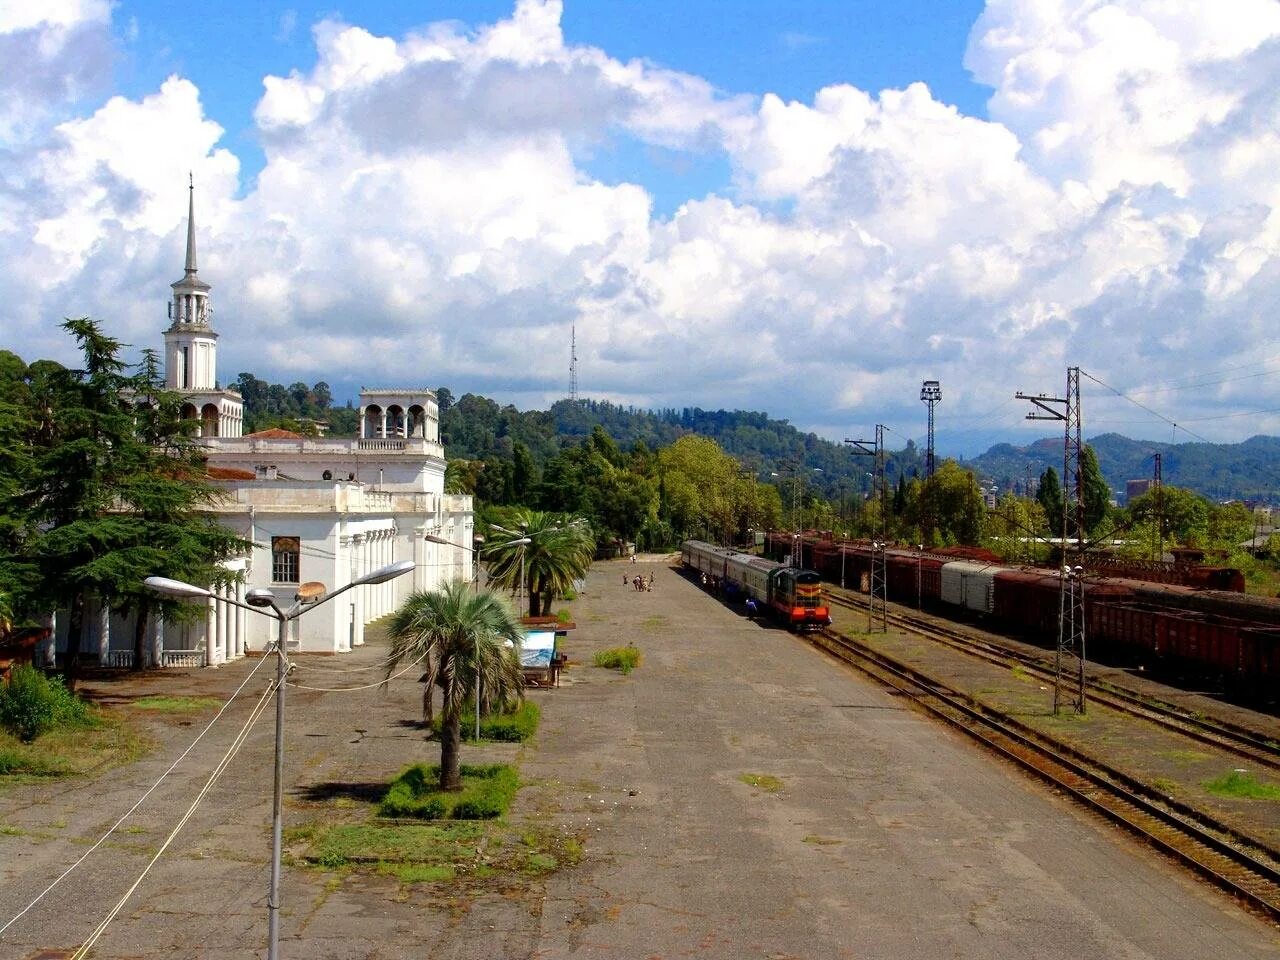 ЖД вокзал Сухум Абхазия платформа. ЖД станция Сухум Абхазия. Вокзал Гагра Абхазия. Железная дорога Адлер Сухум. Гудаута гагра